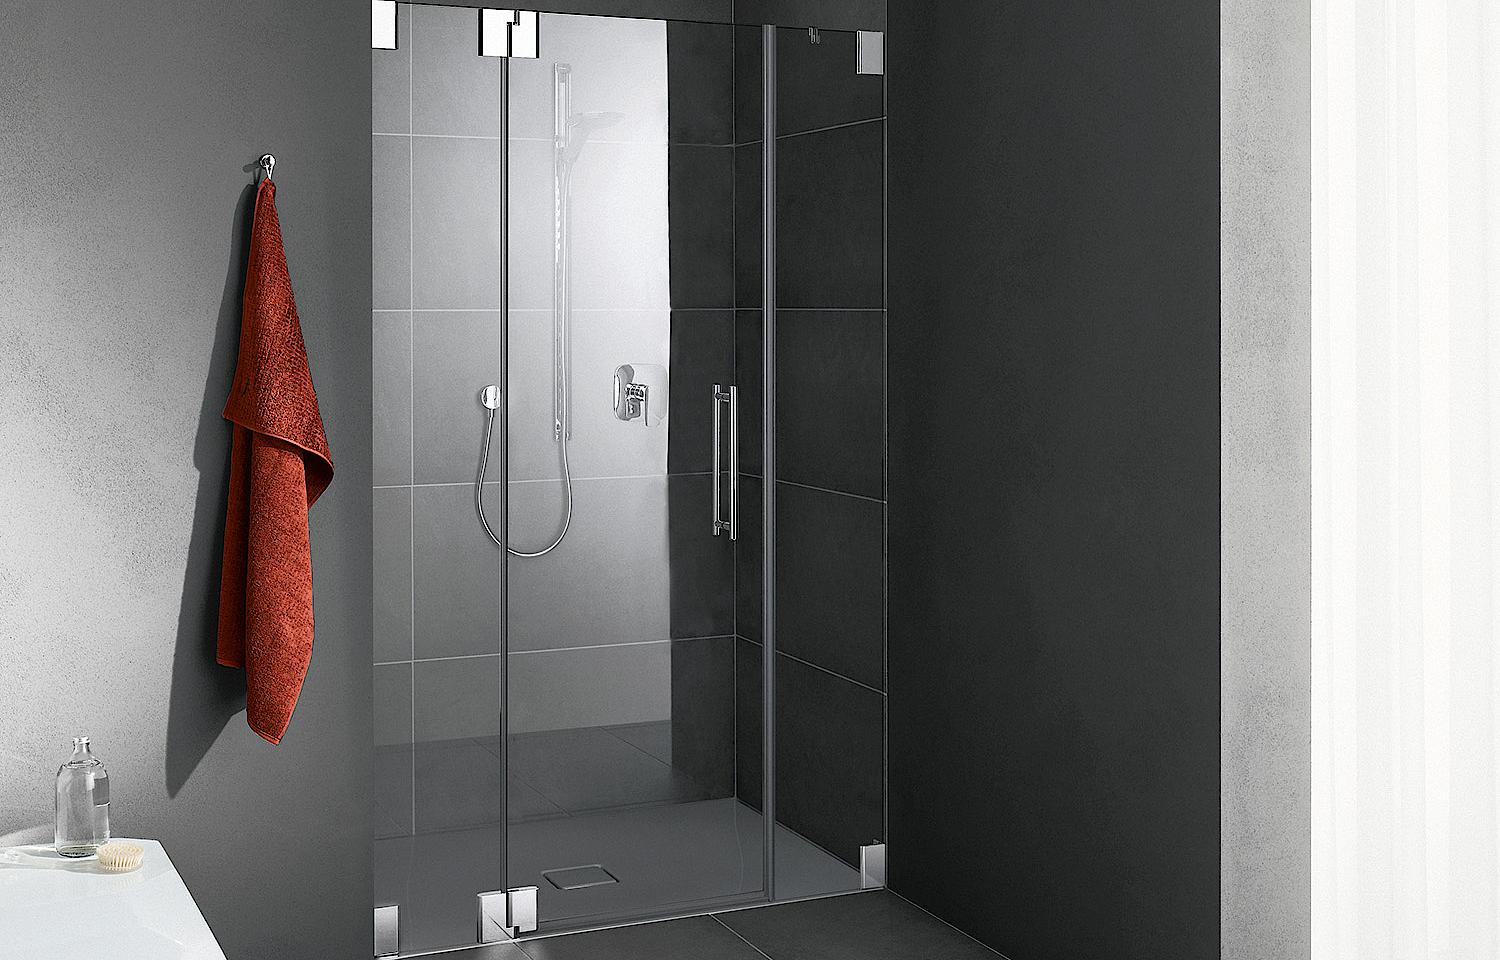 Kermi hinged shower enclosure, PASA single panel hinged door with fixed panels